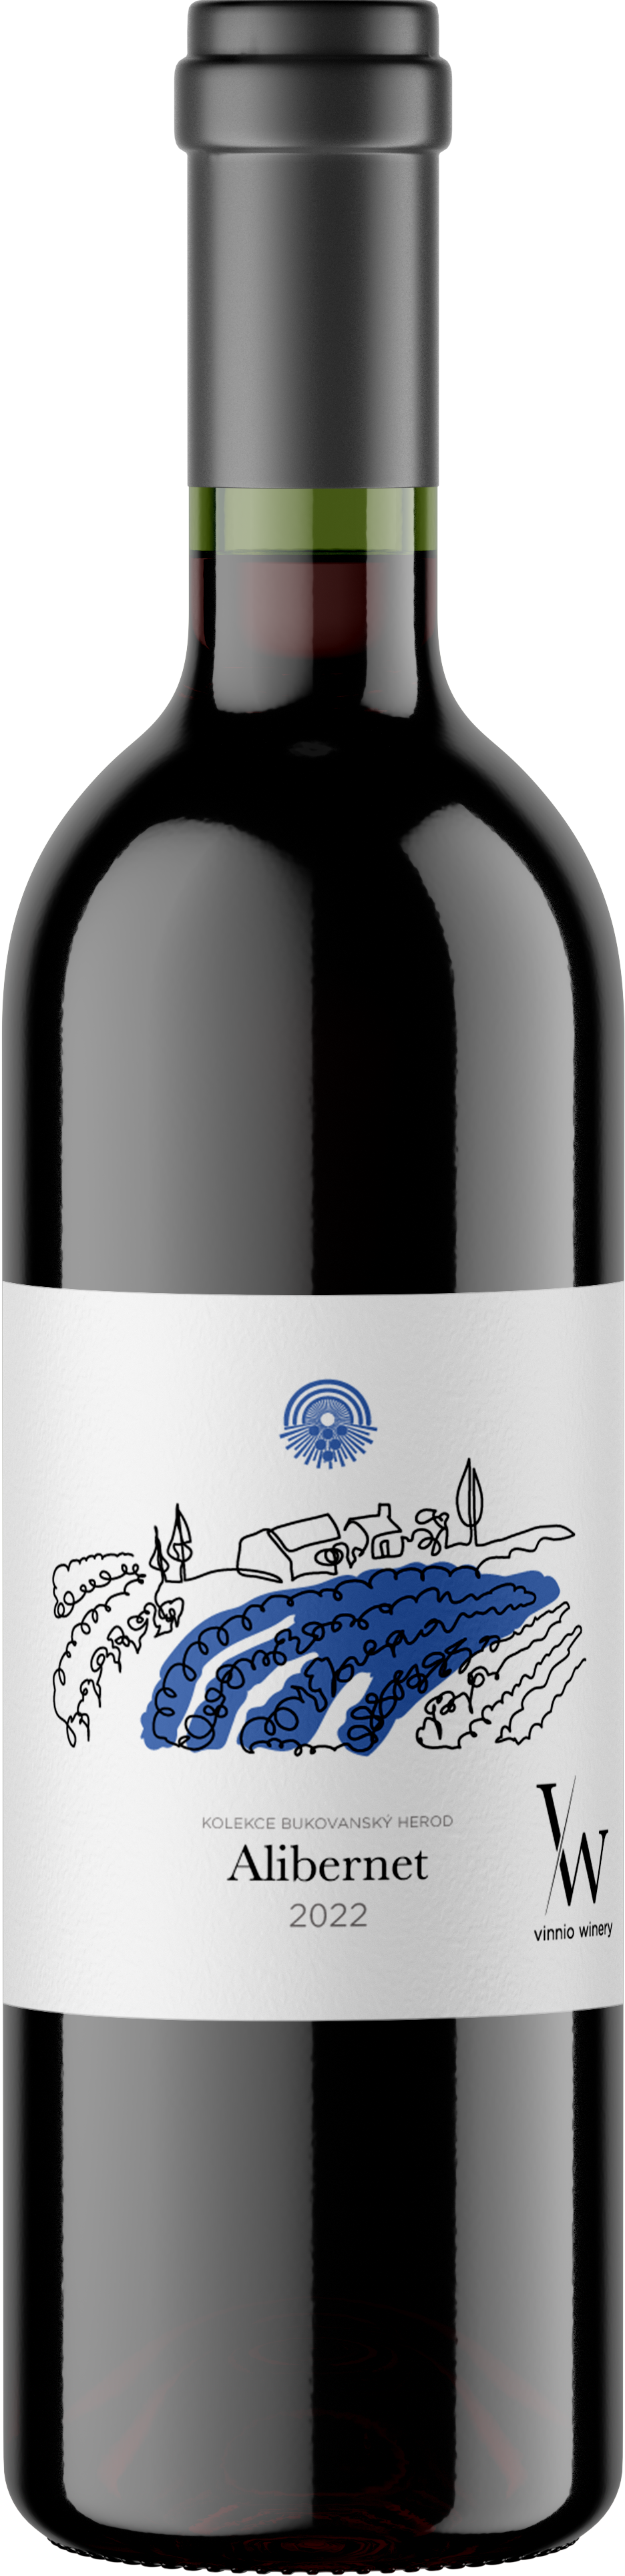 Vinnio Winery - Alibernet 2022